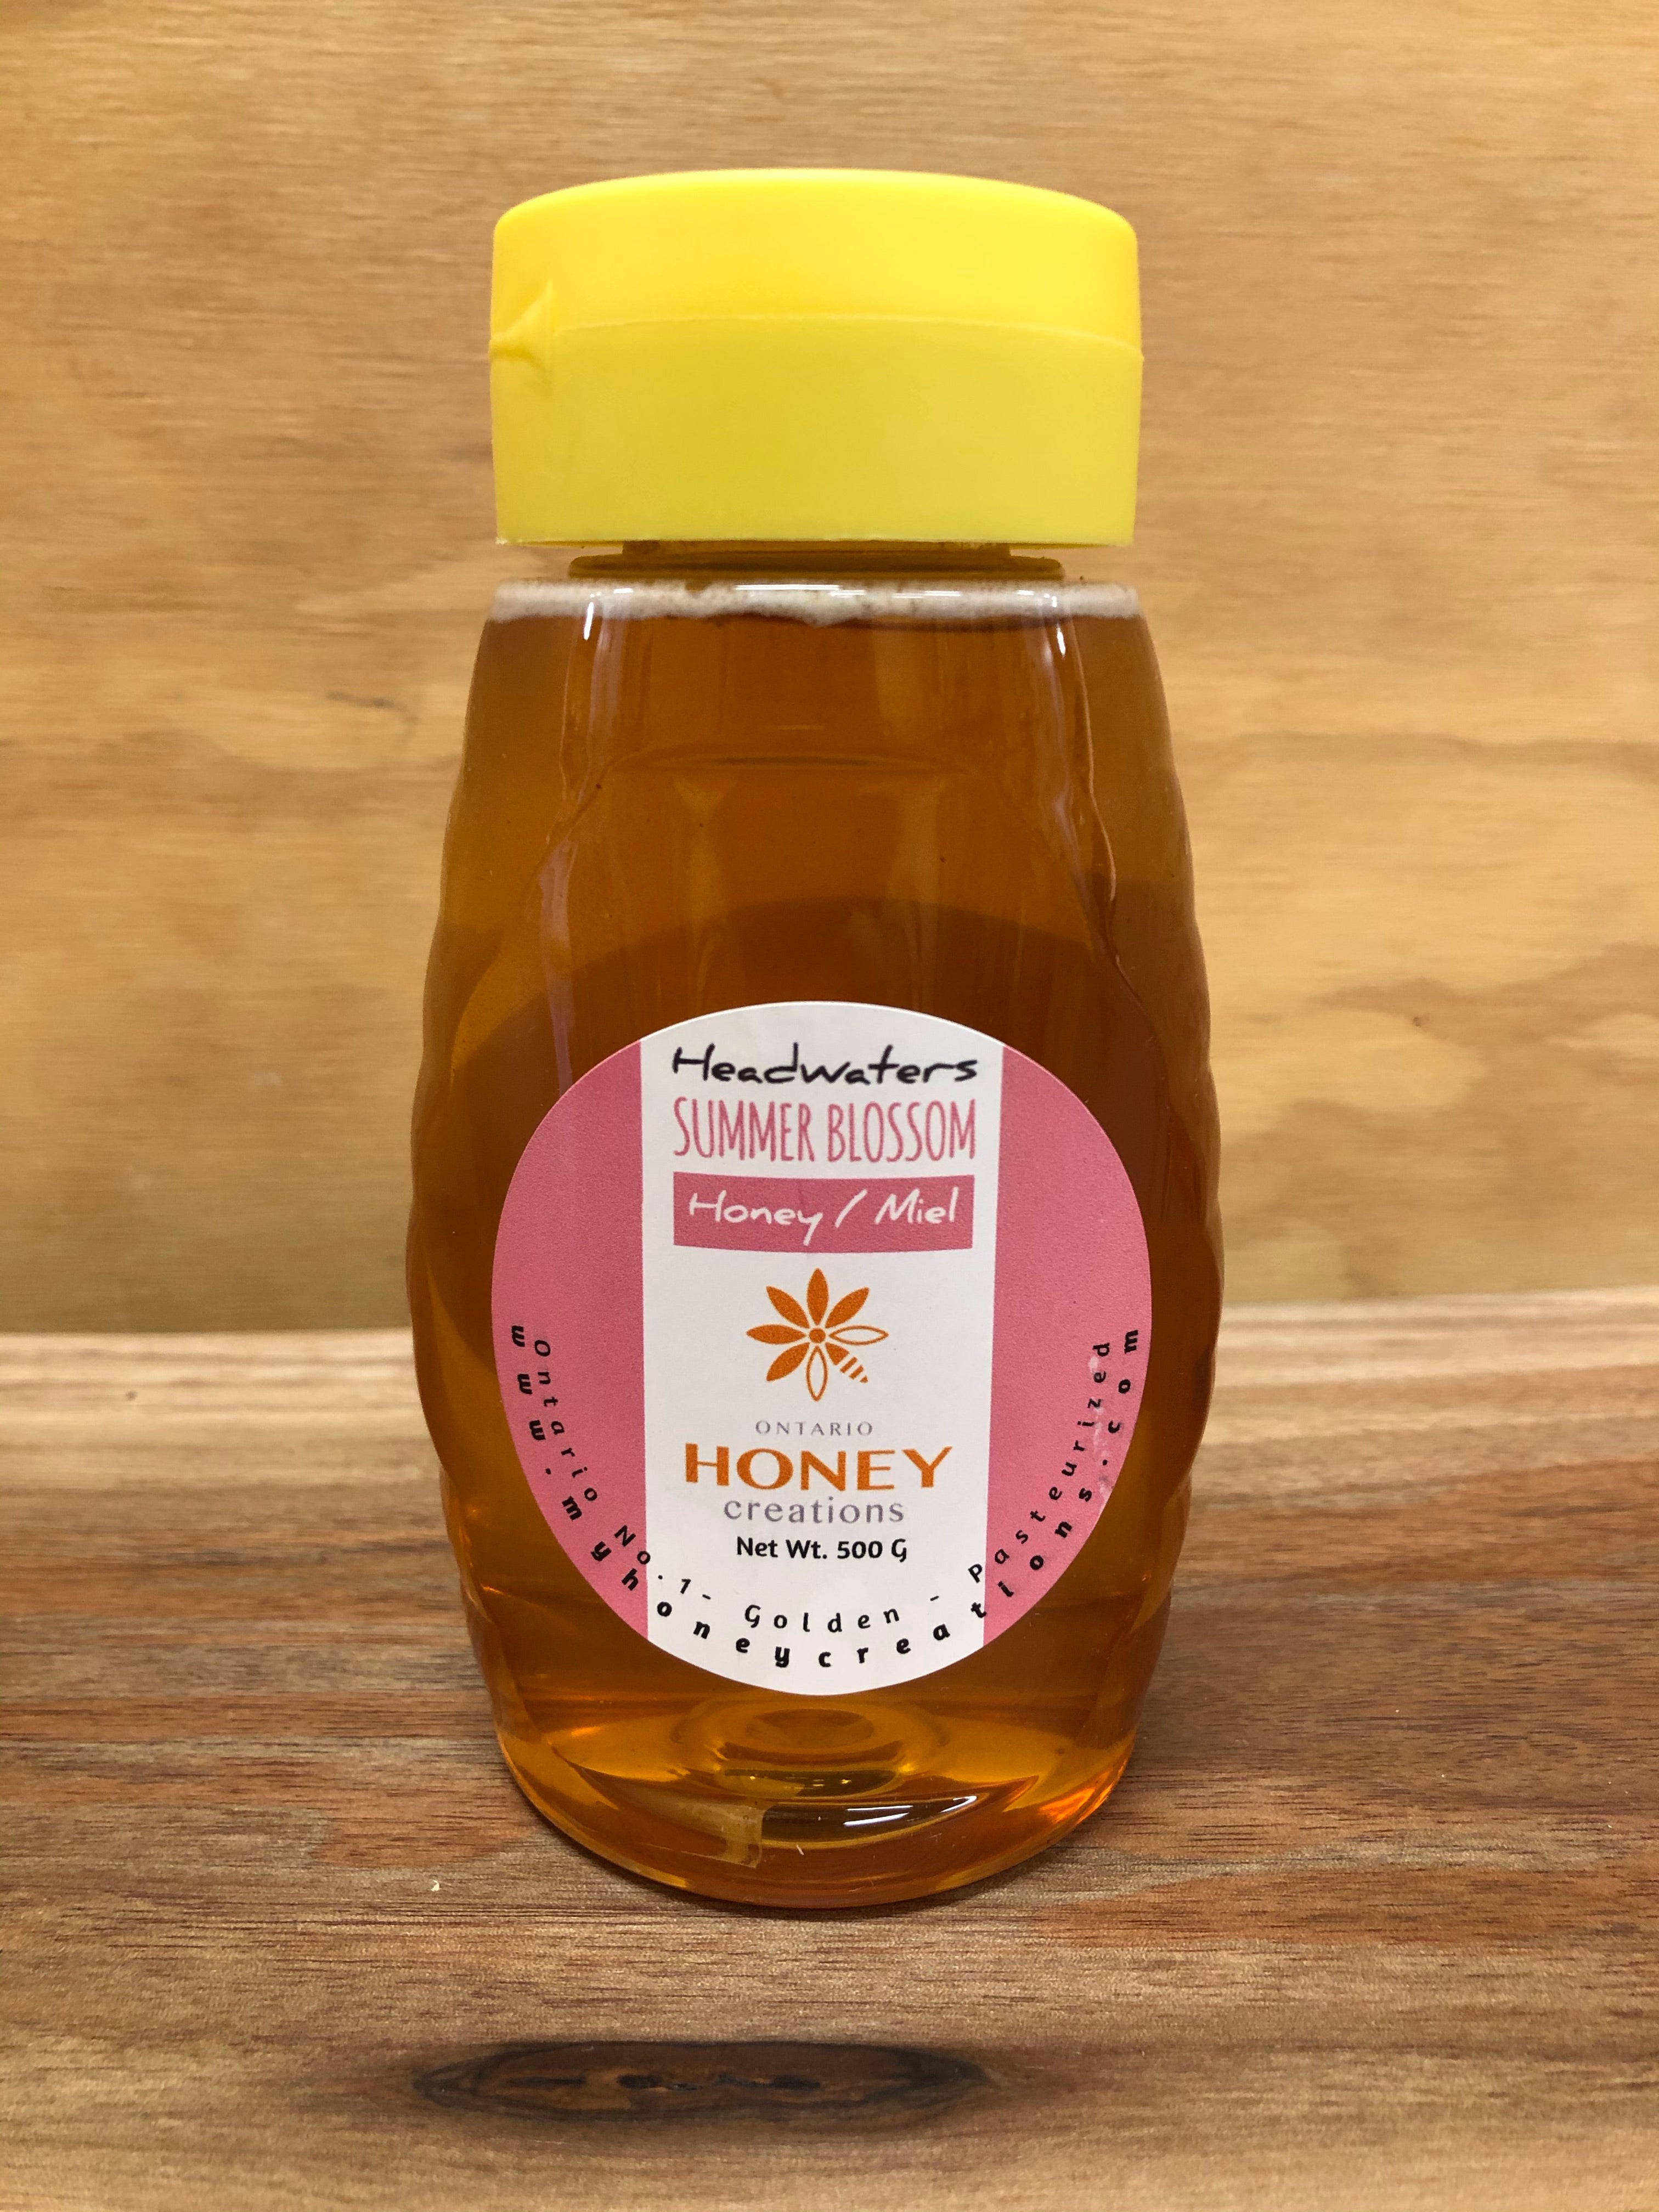 Ontario Honey Creations - Pasturized 500 gr